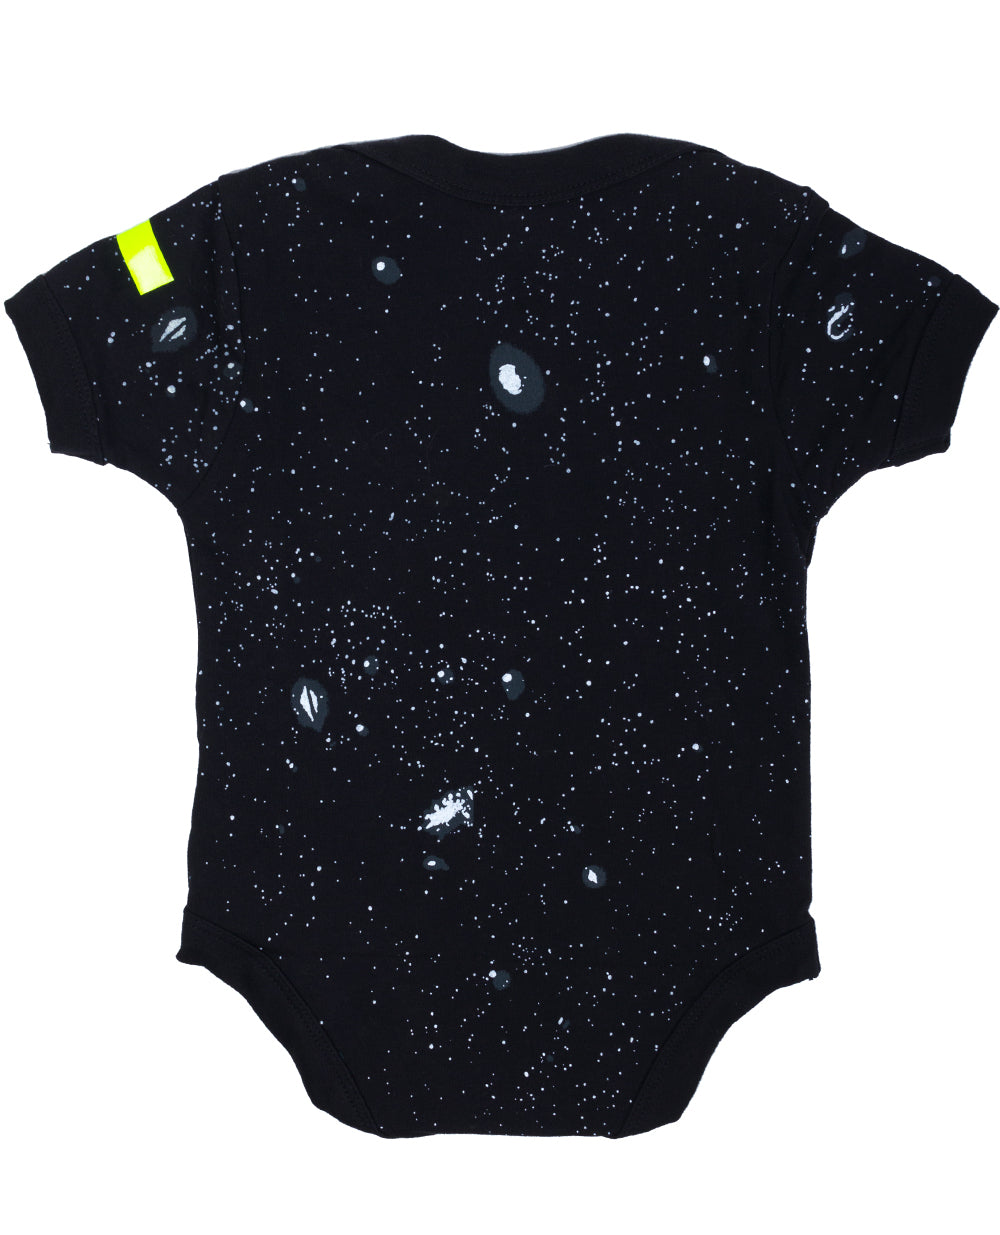 BABY GROW SPACE HELMET.